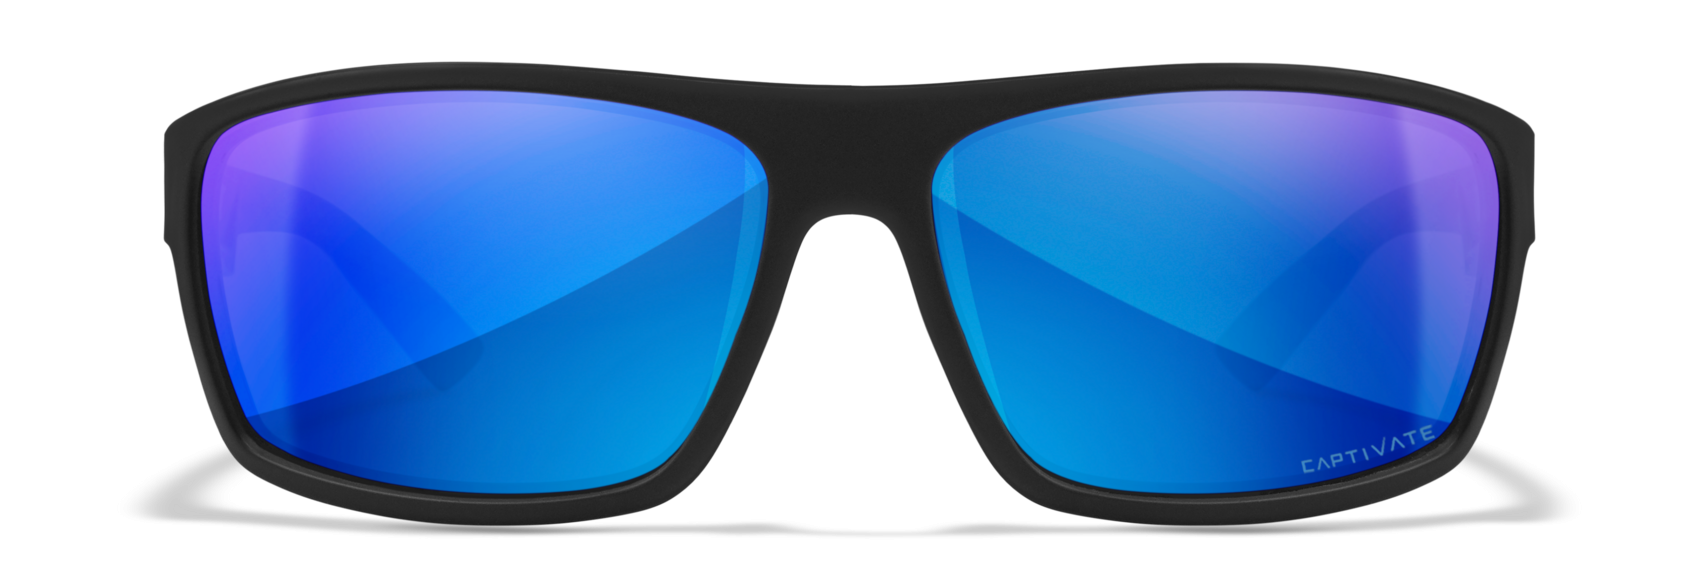 Wiley X Peak Sunglasses, 2 colors